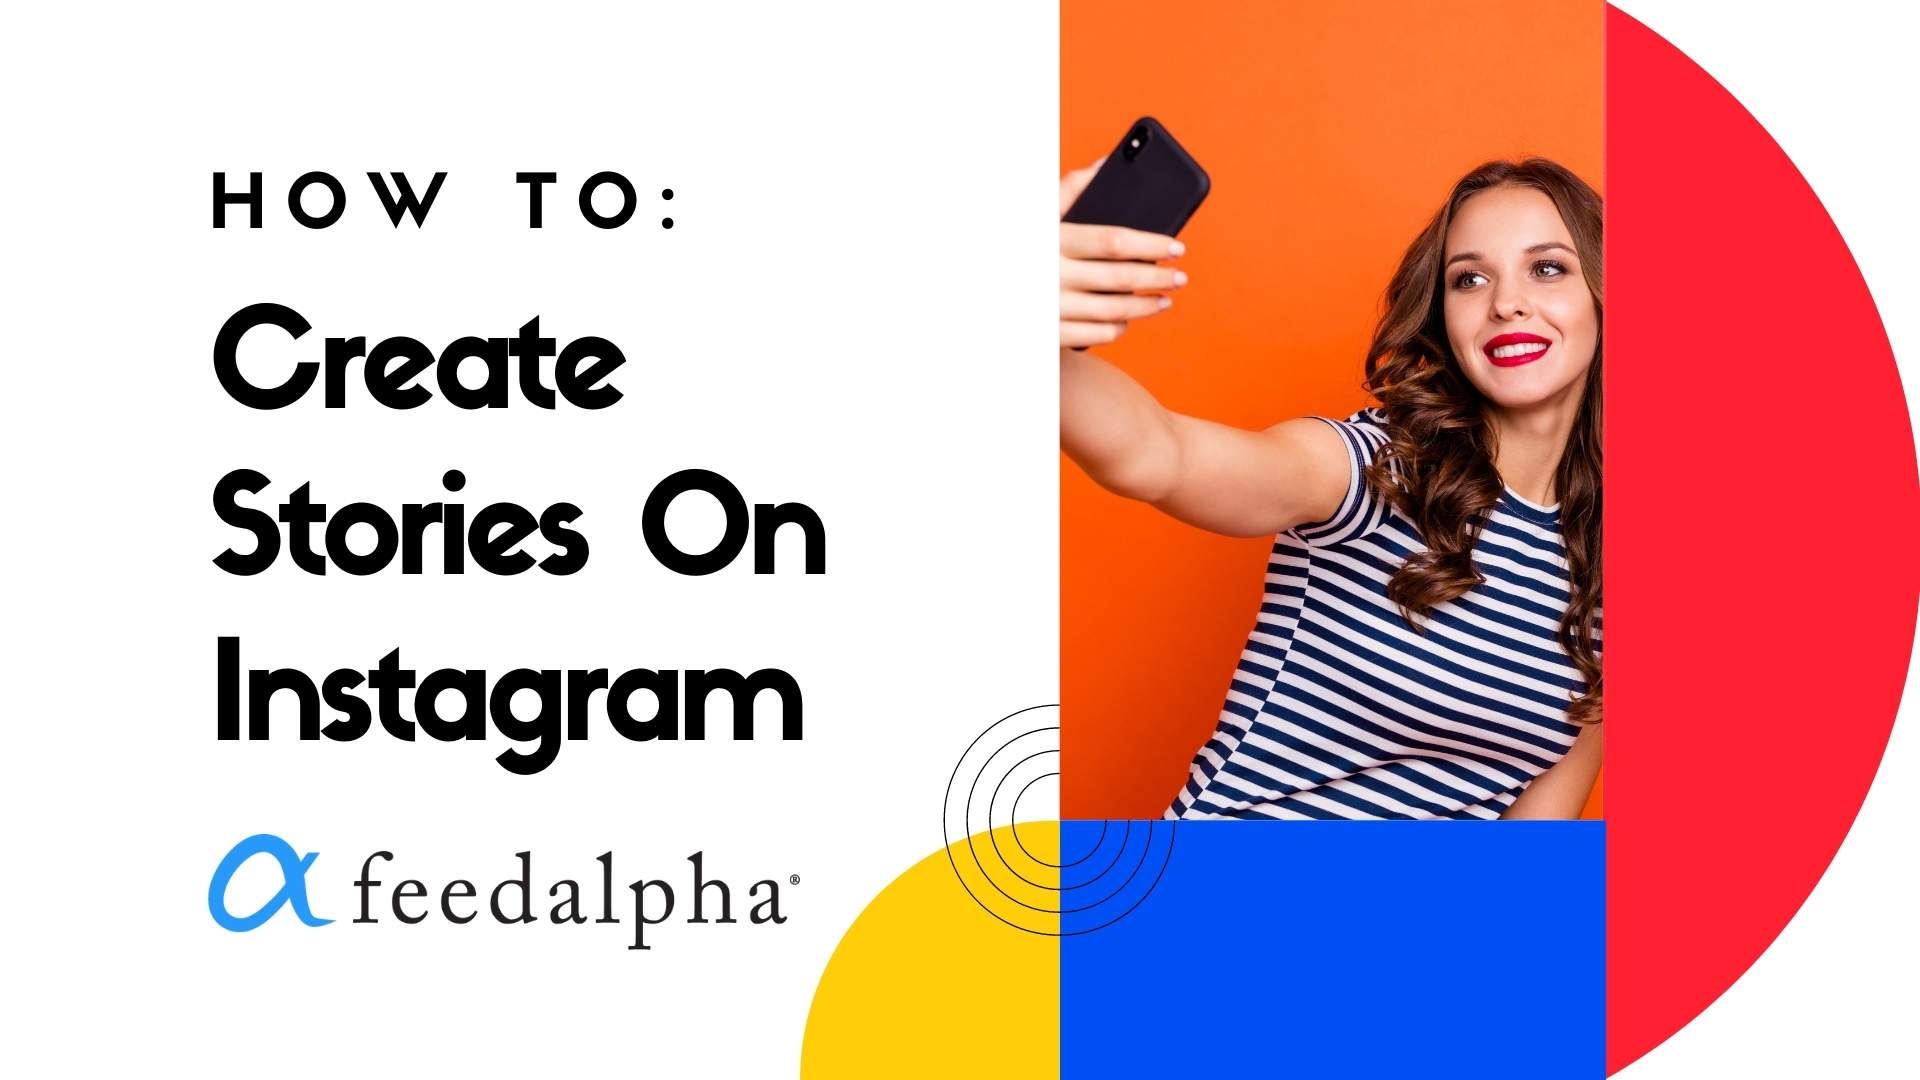 Create Stories On Instagram